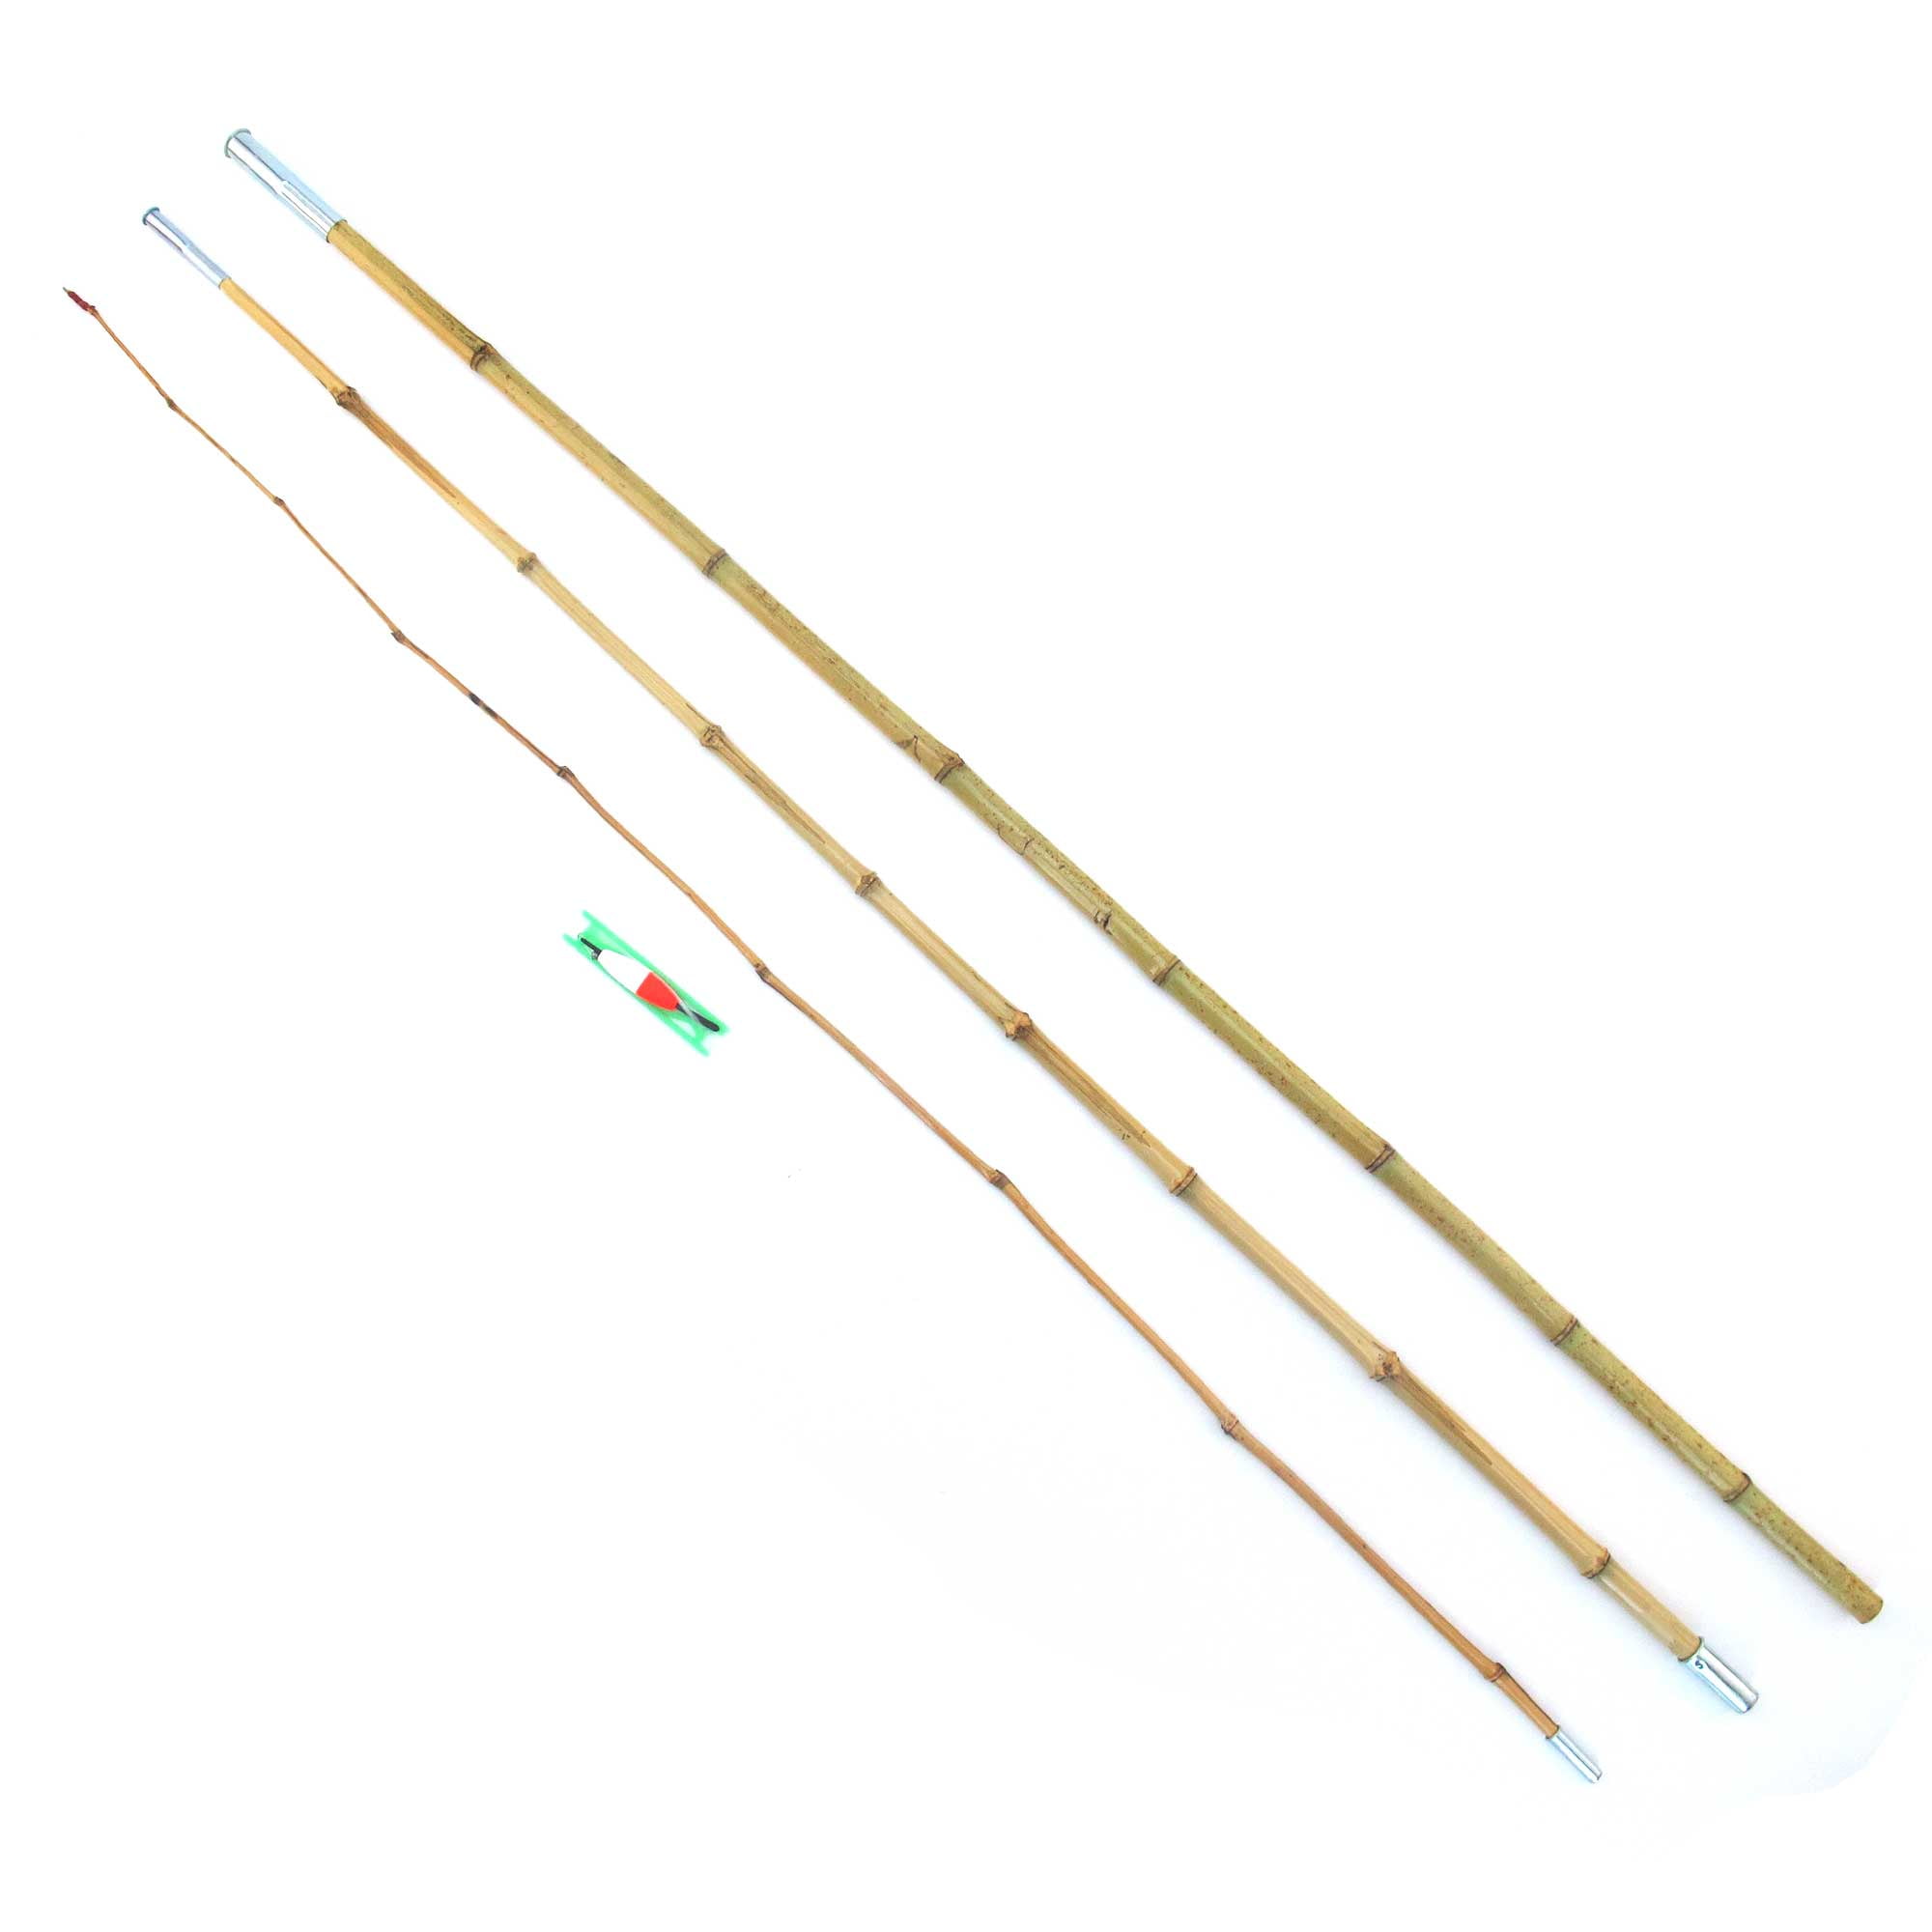 Bamboo Cane Fishing Pole w/ Bobber, Hook, Line, Sinker - 3-piece Vintage Fishing  Pole - 11.5 ft. - BambooMN - 3 Sets 